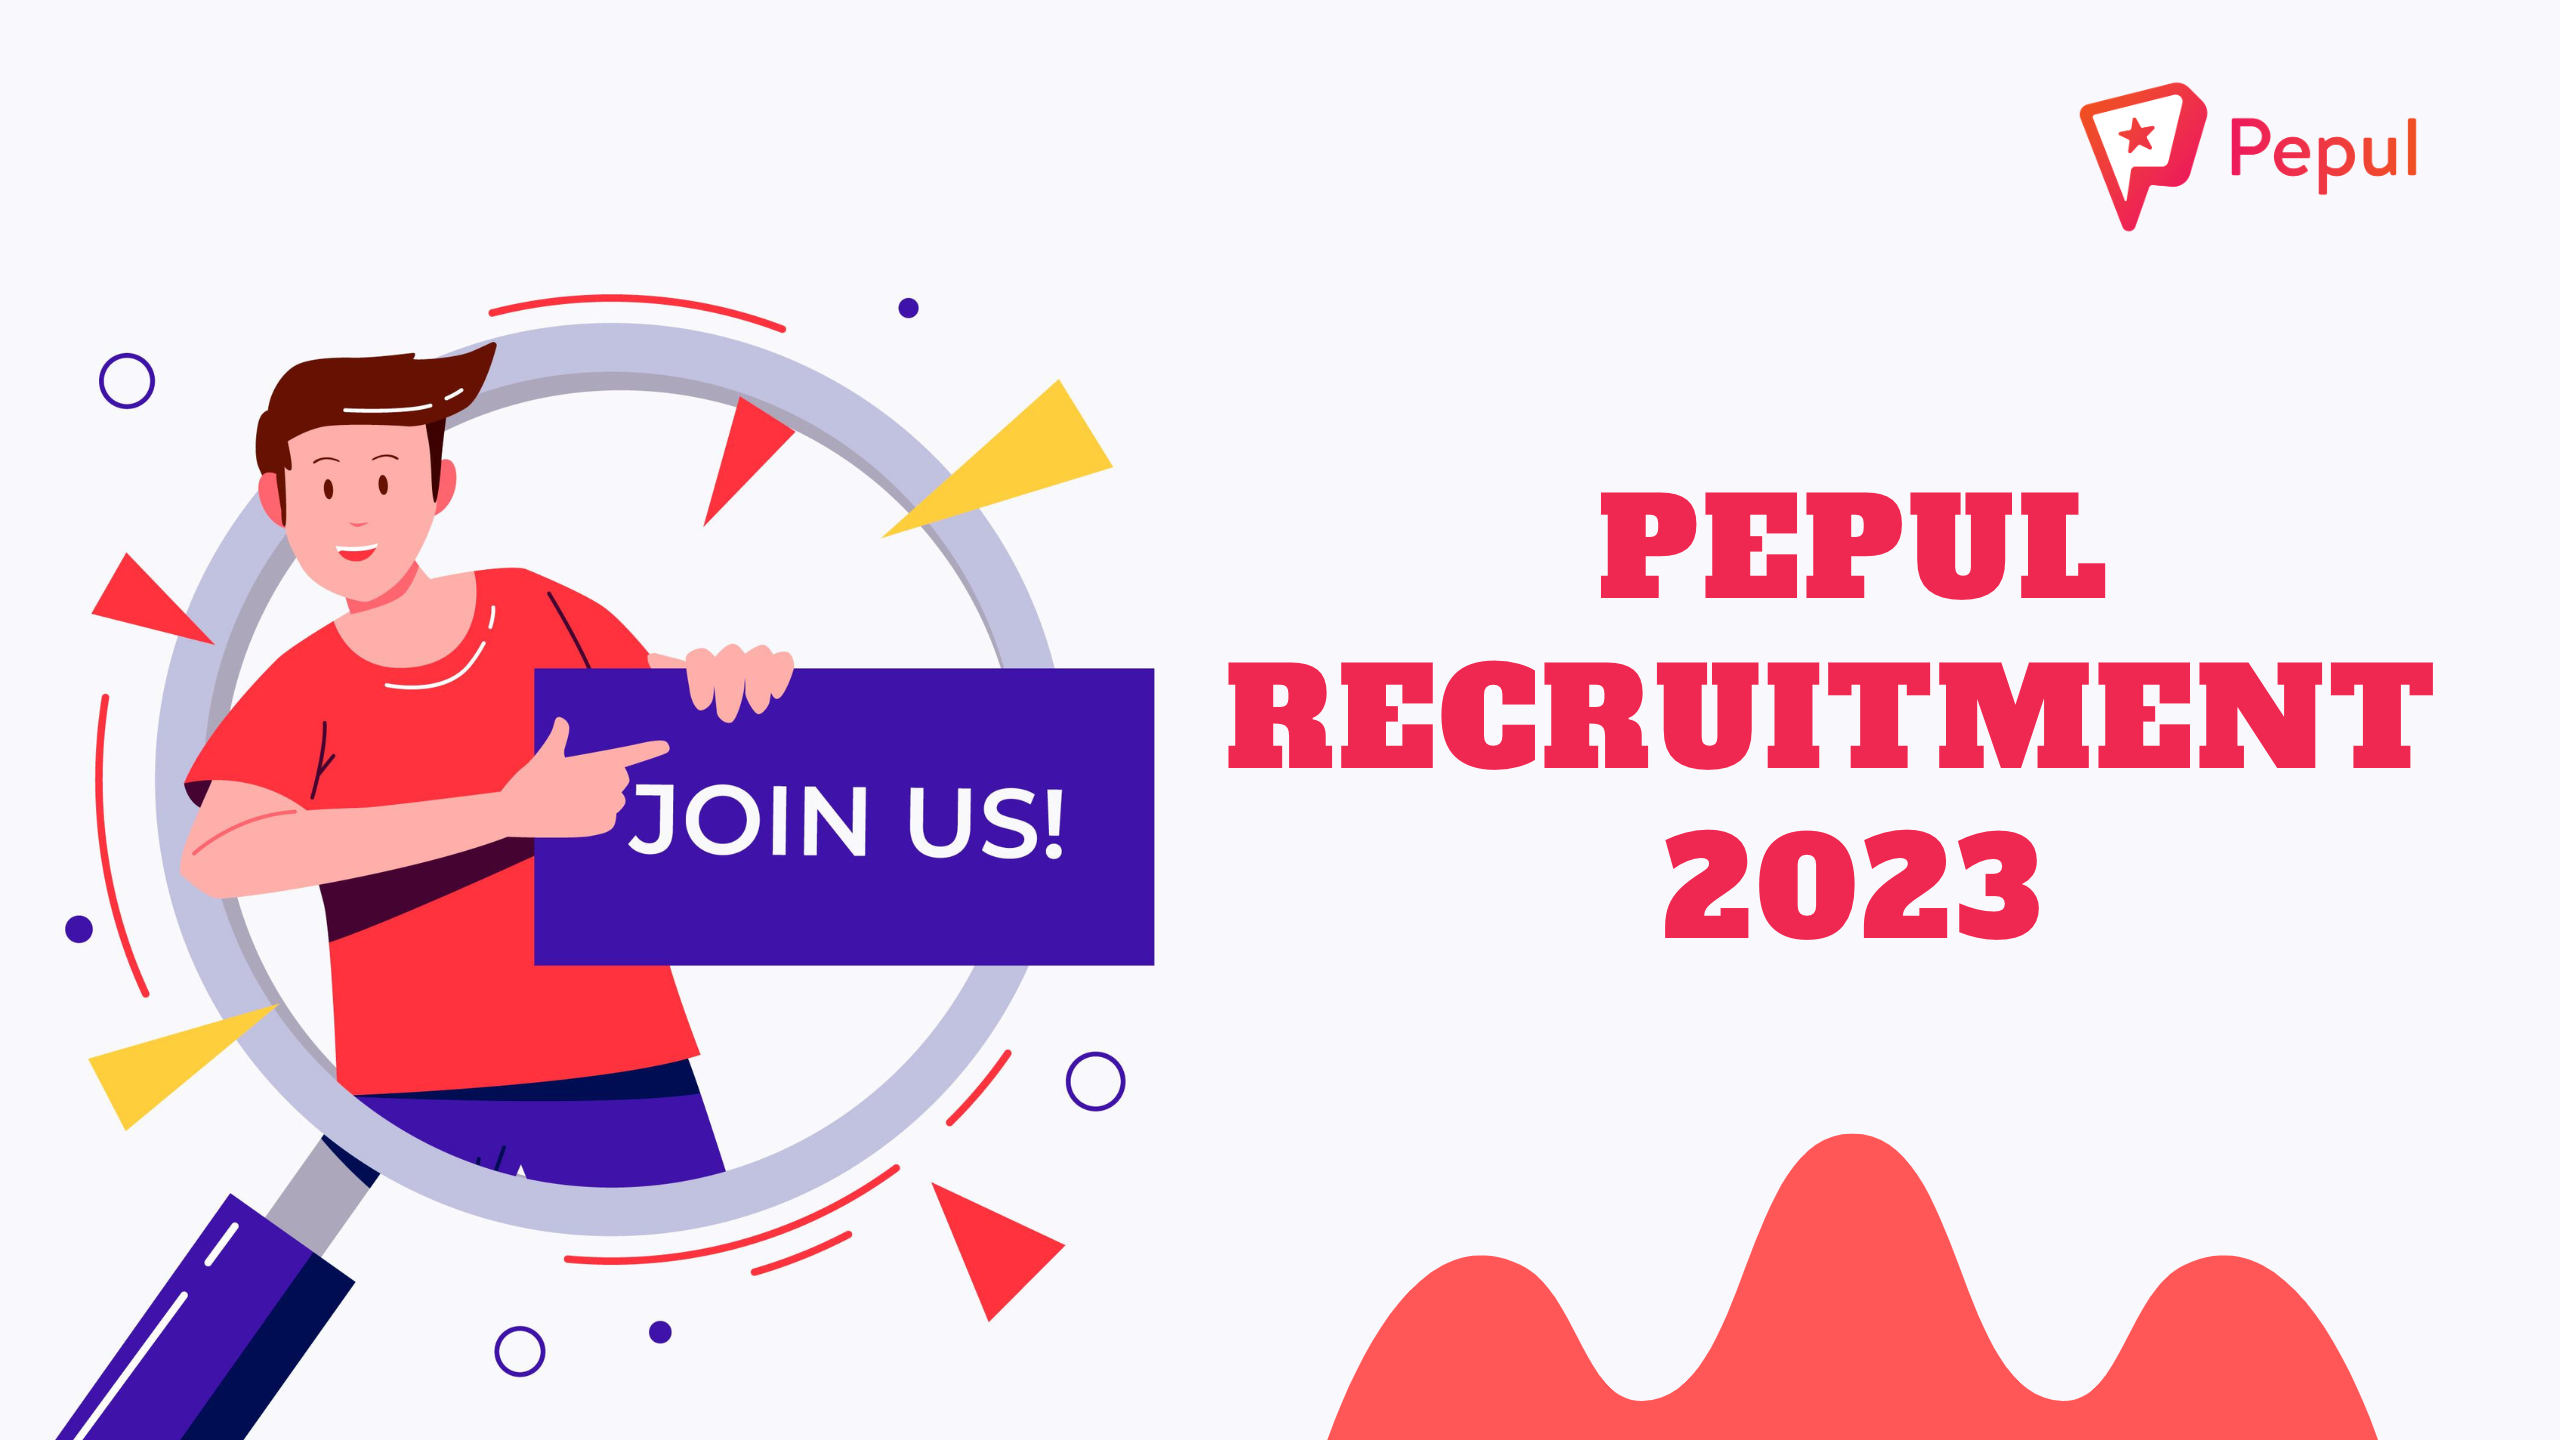 Pepul App Job Recruitment in Chennai 2023